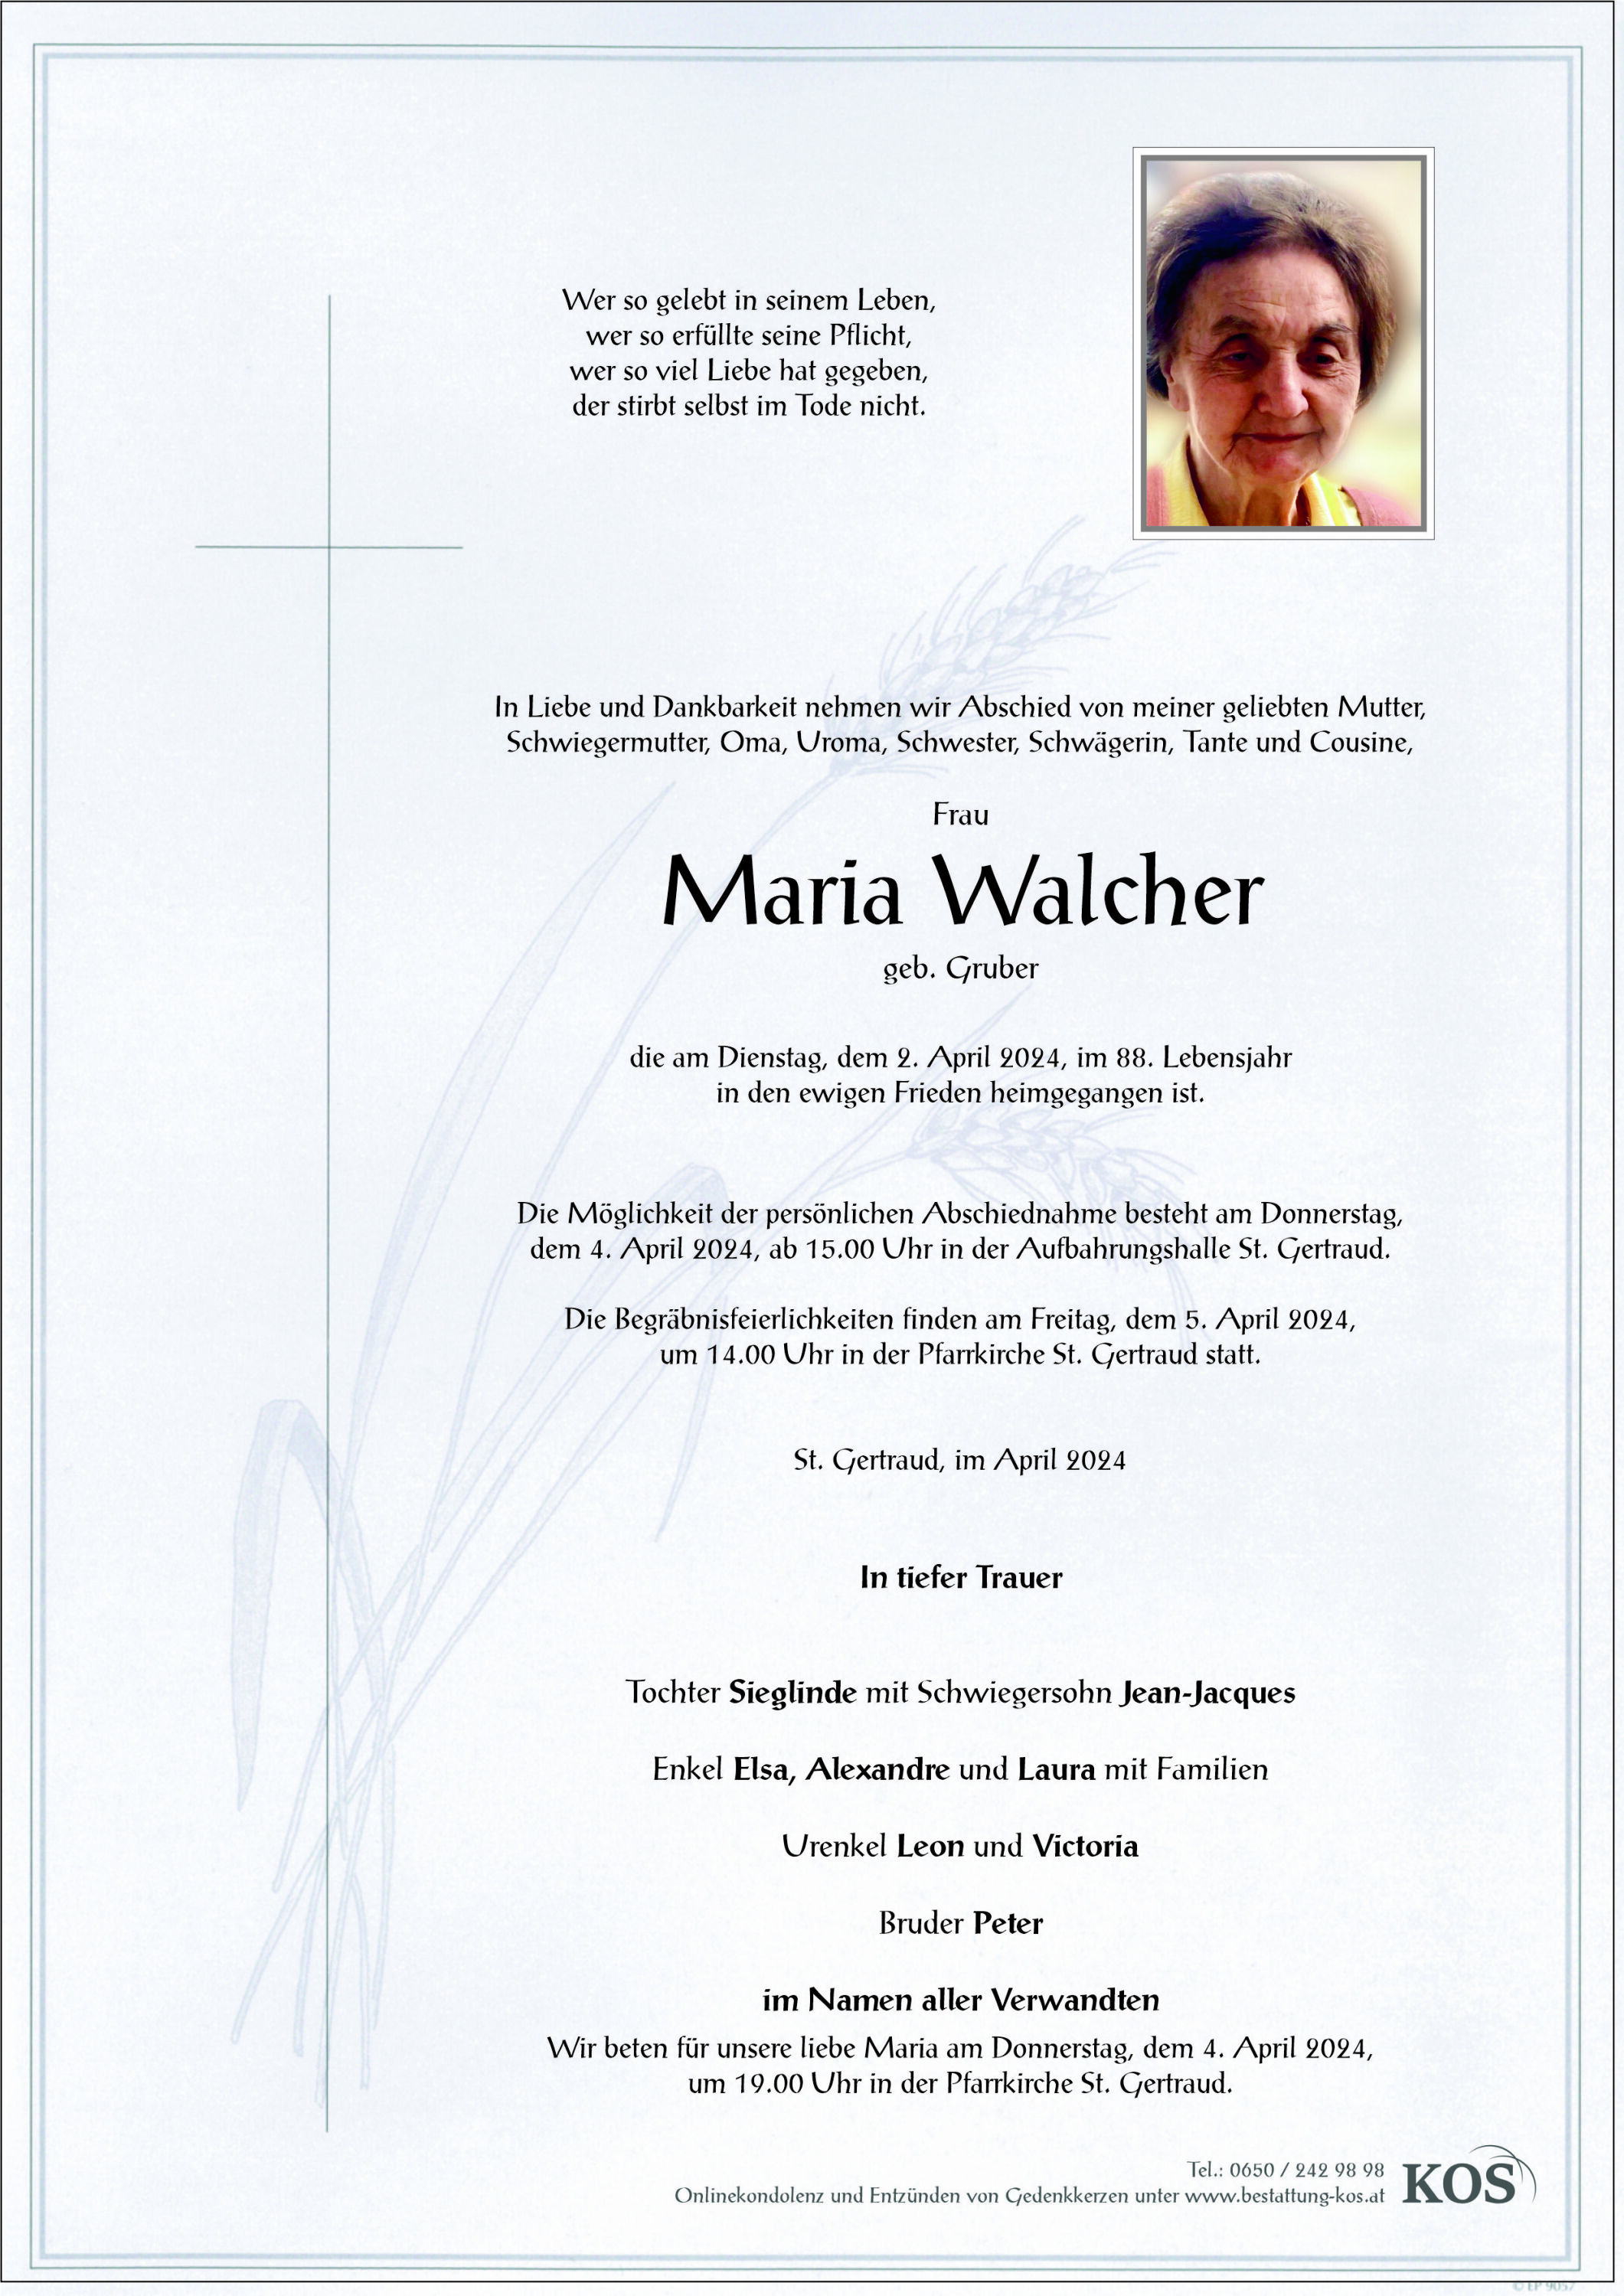 Maria Walcher